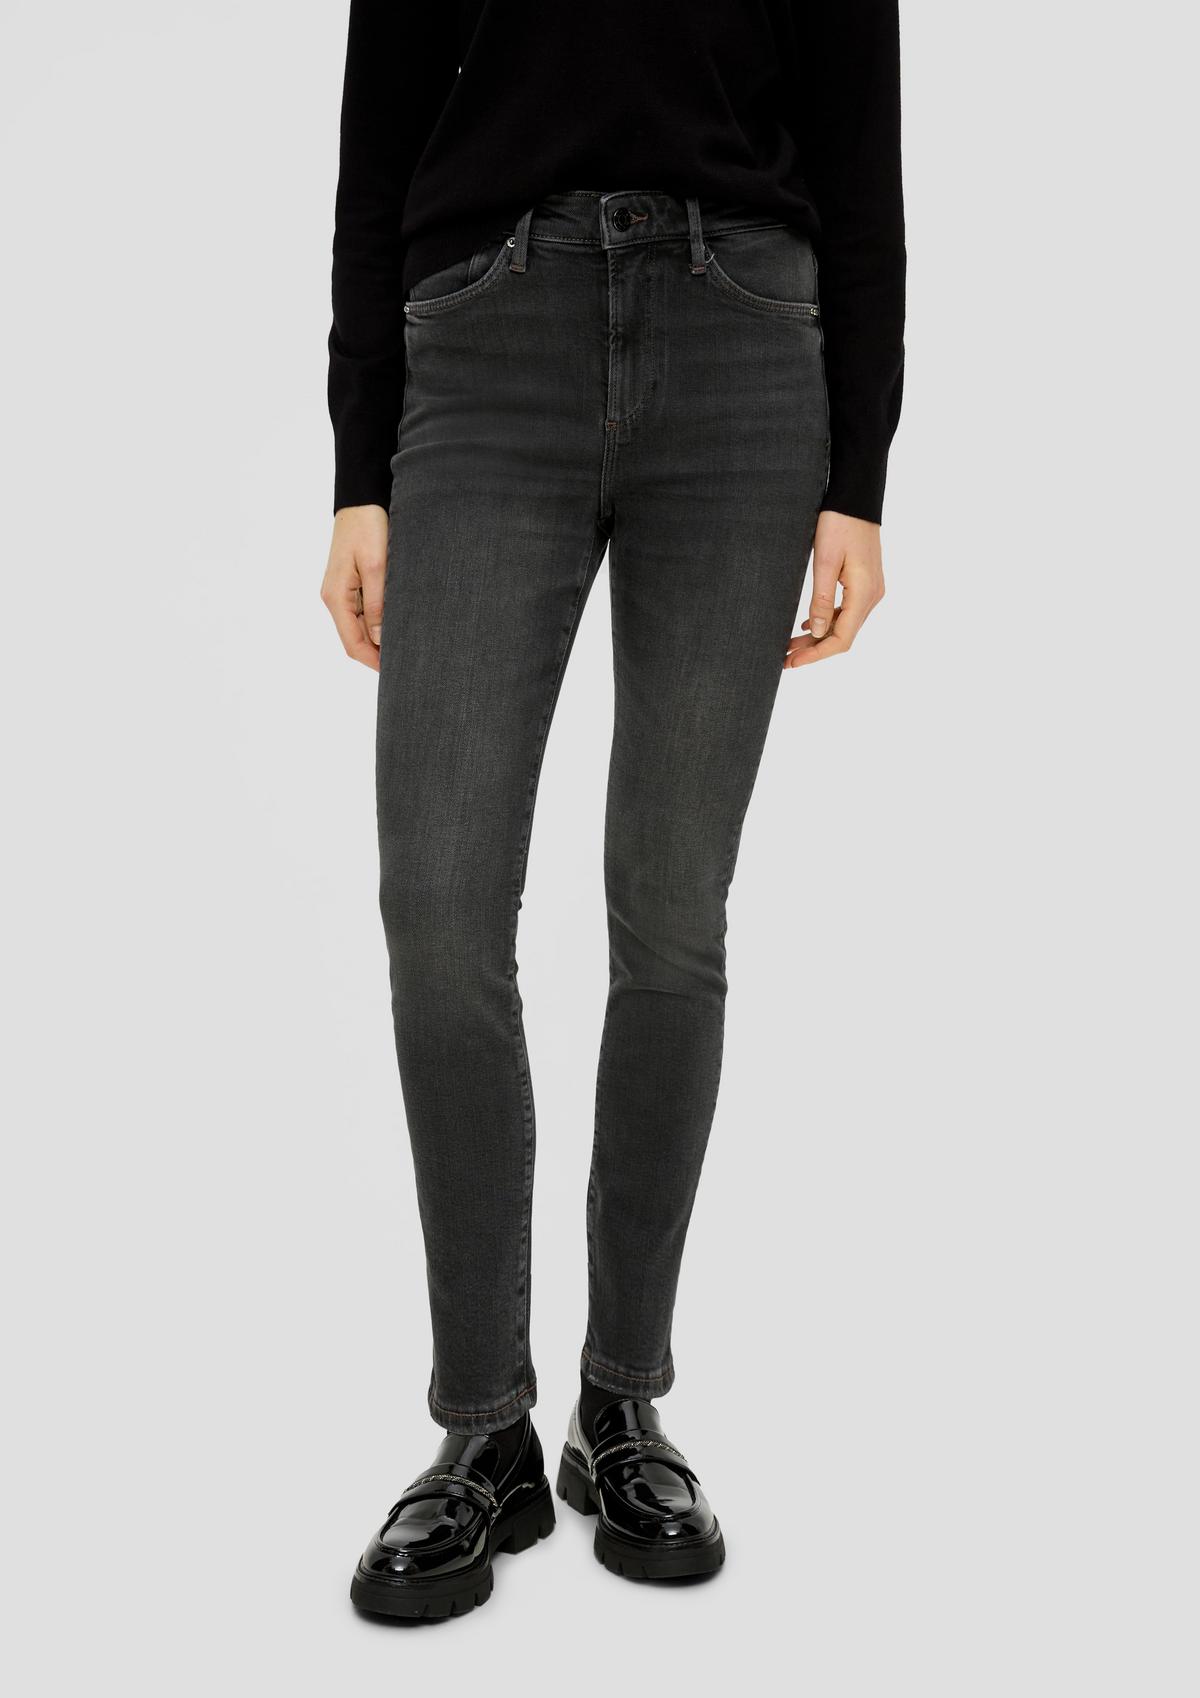 Izabell jeans / skinny fit / high rise / skinny leg